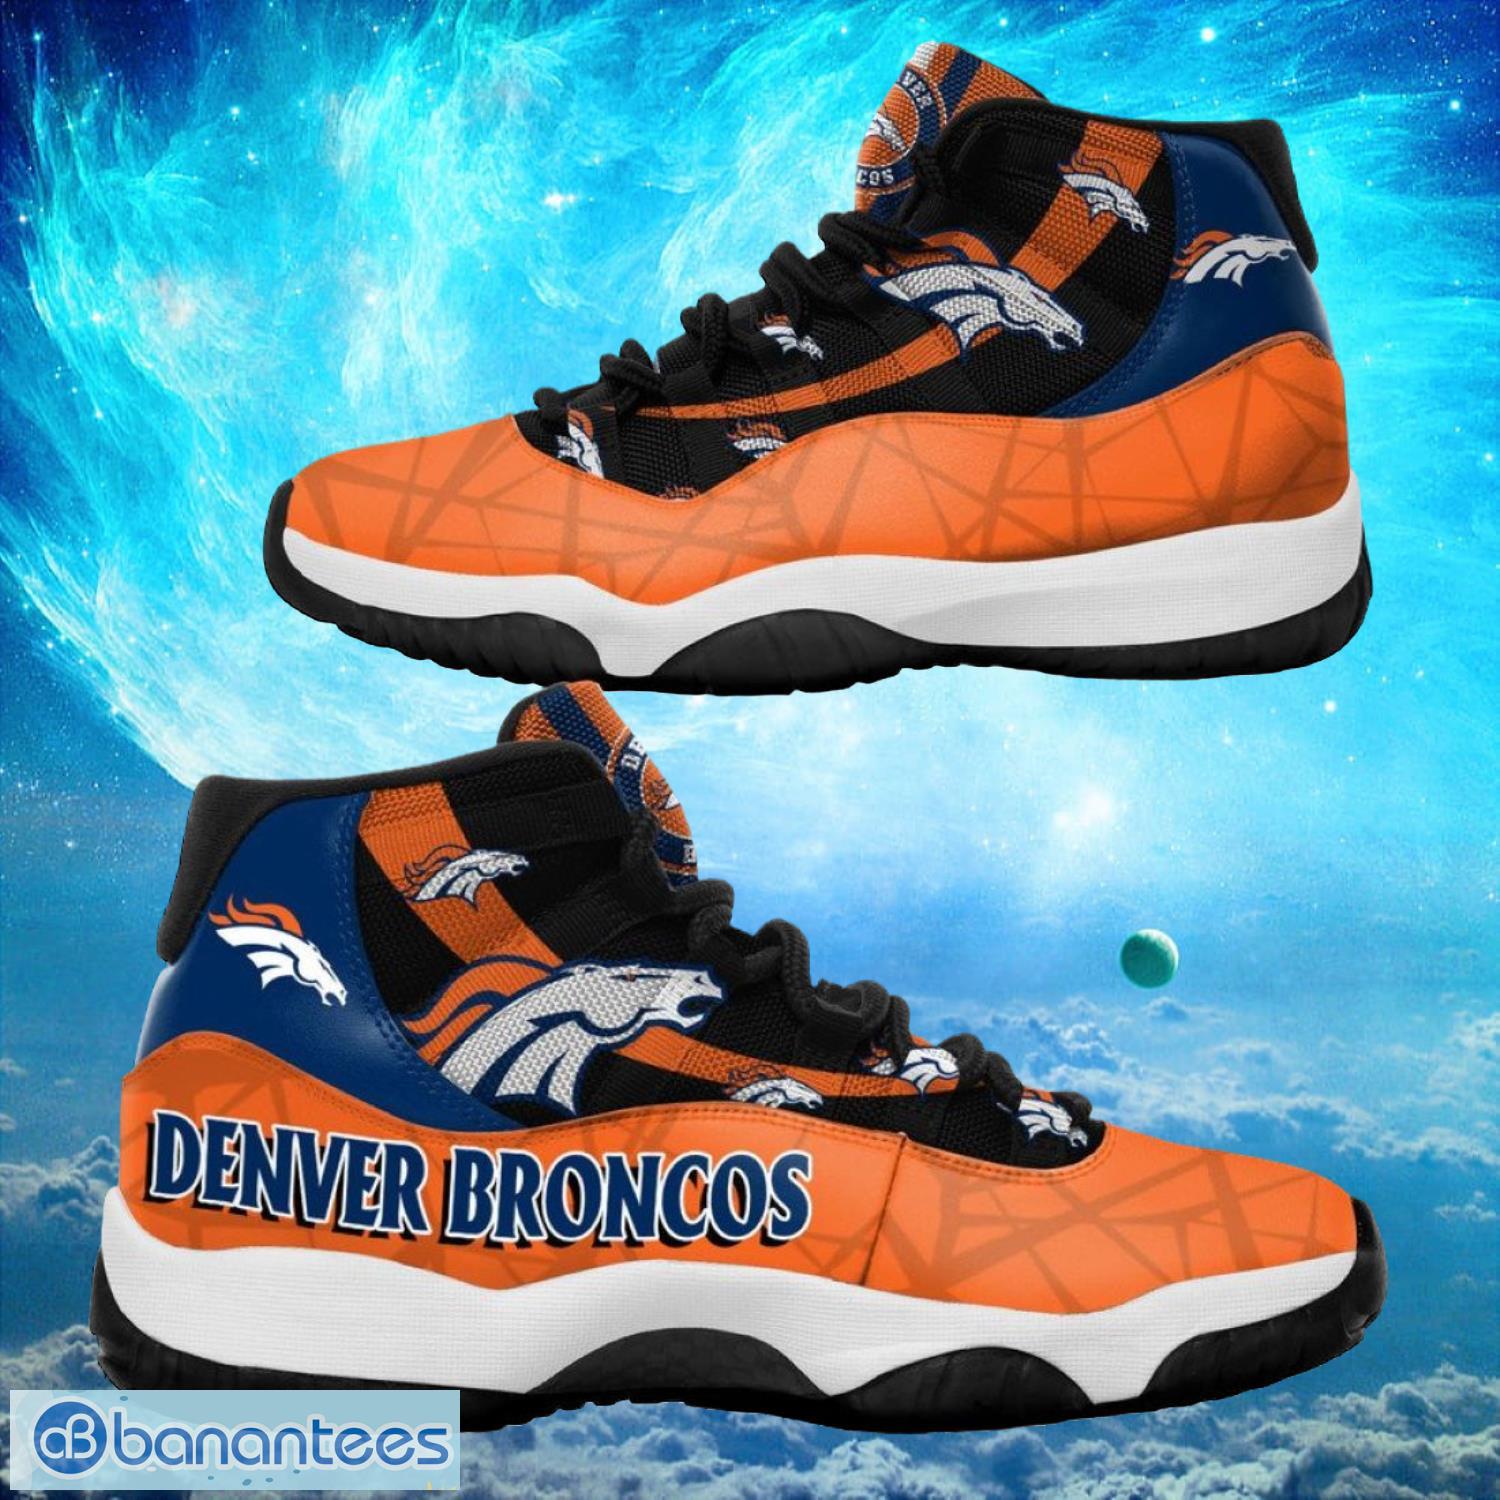 Denver Broncos NFL Air Jordan 11 Sneakers Shoes Gift For Fans Product Photo 1